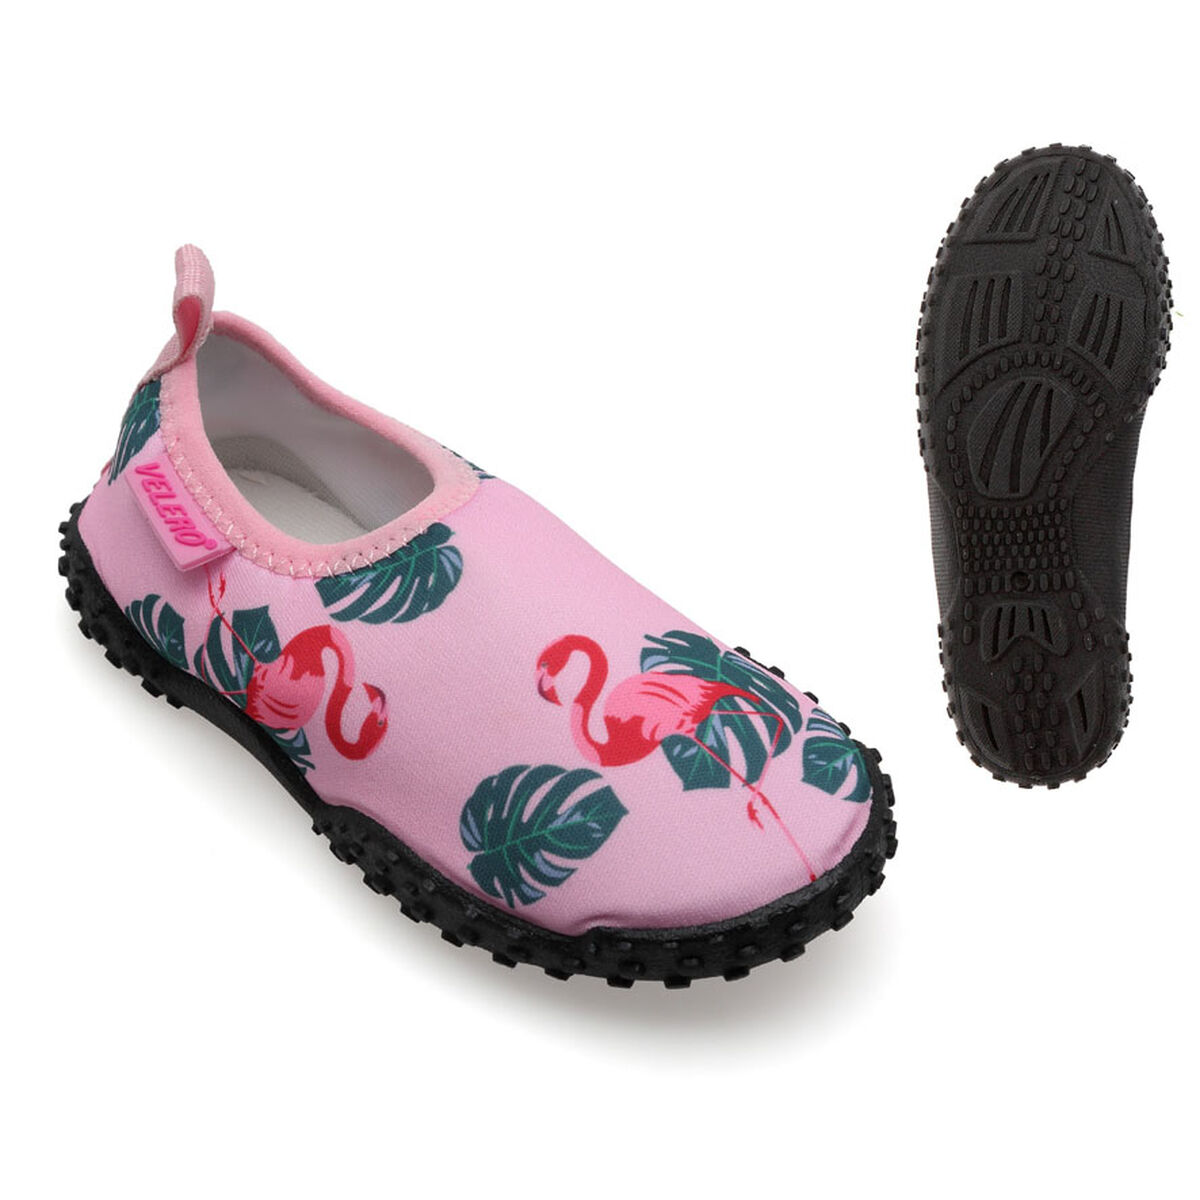 Botoși pentru Copii Flamingo Roz - Mărime la picior 28